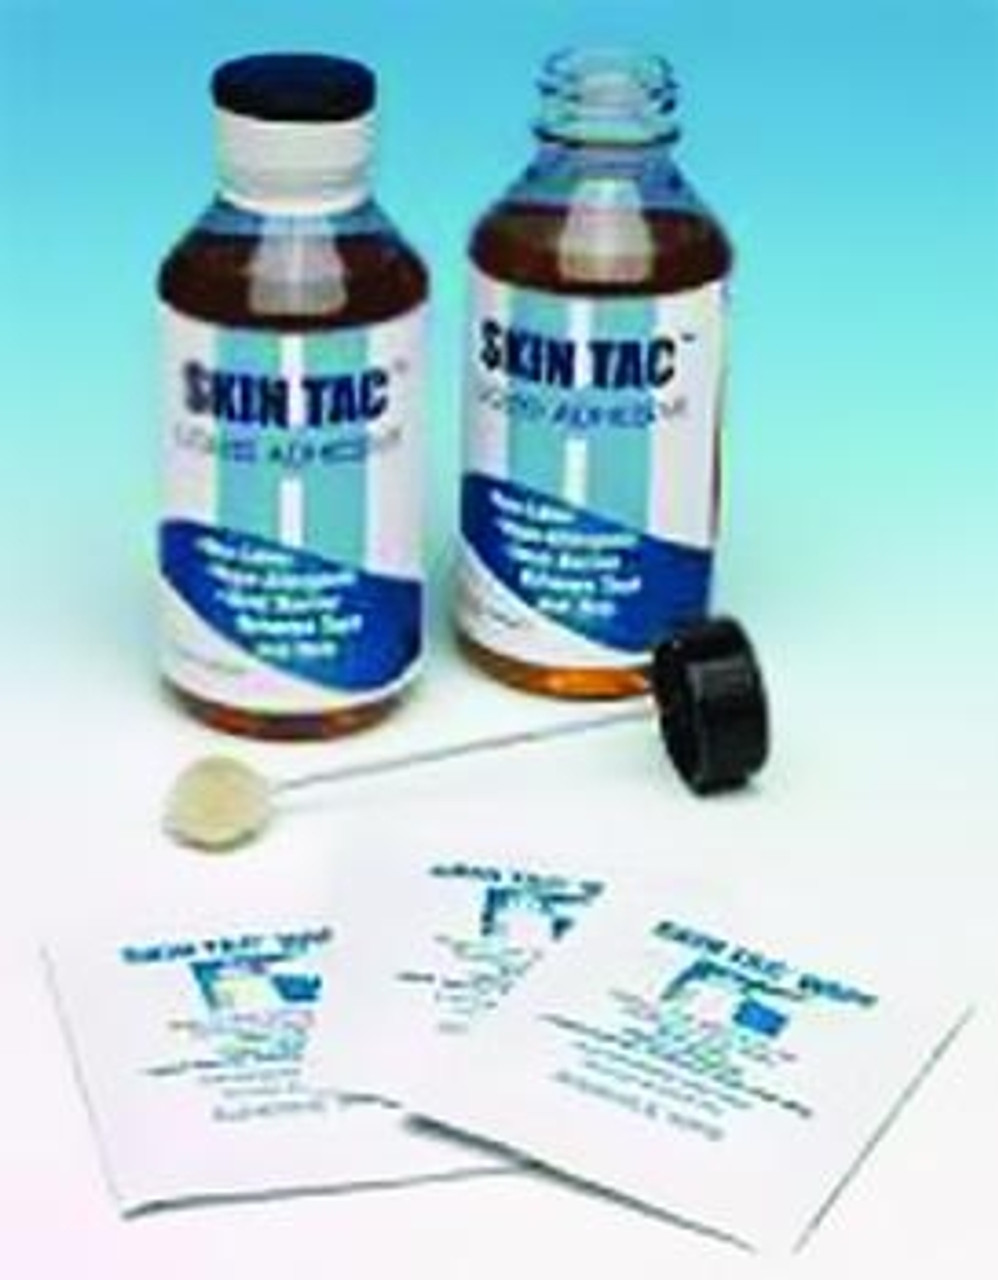 Skin Tac Adhesive Barrier Prep Wipe